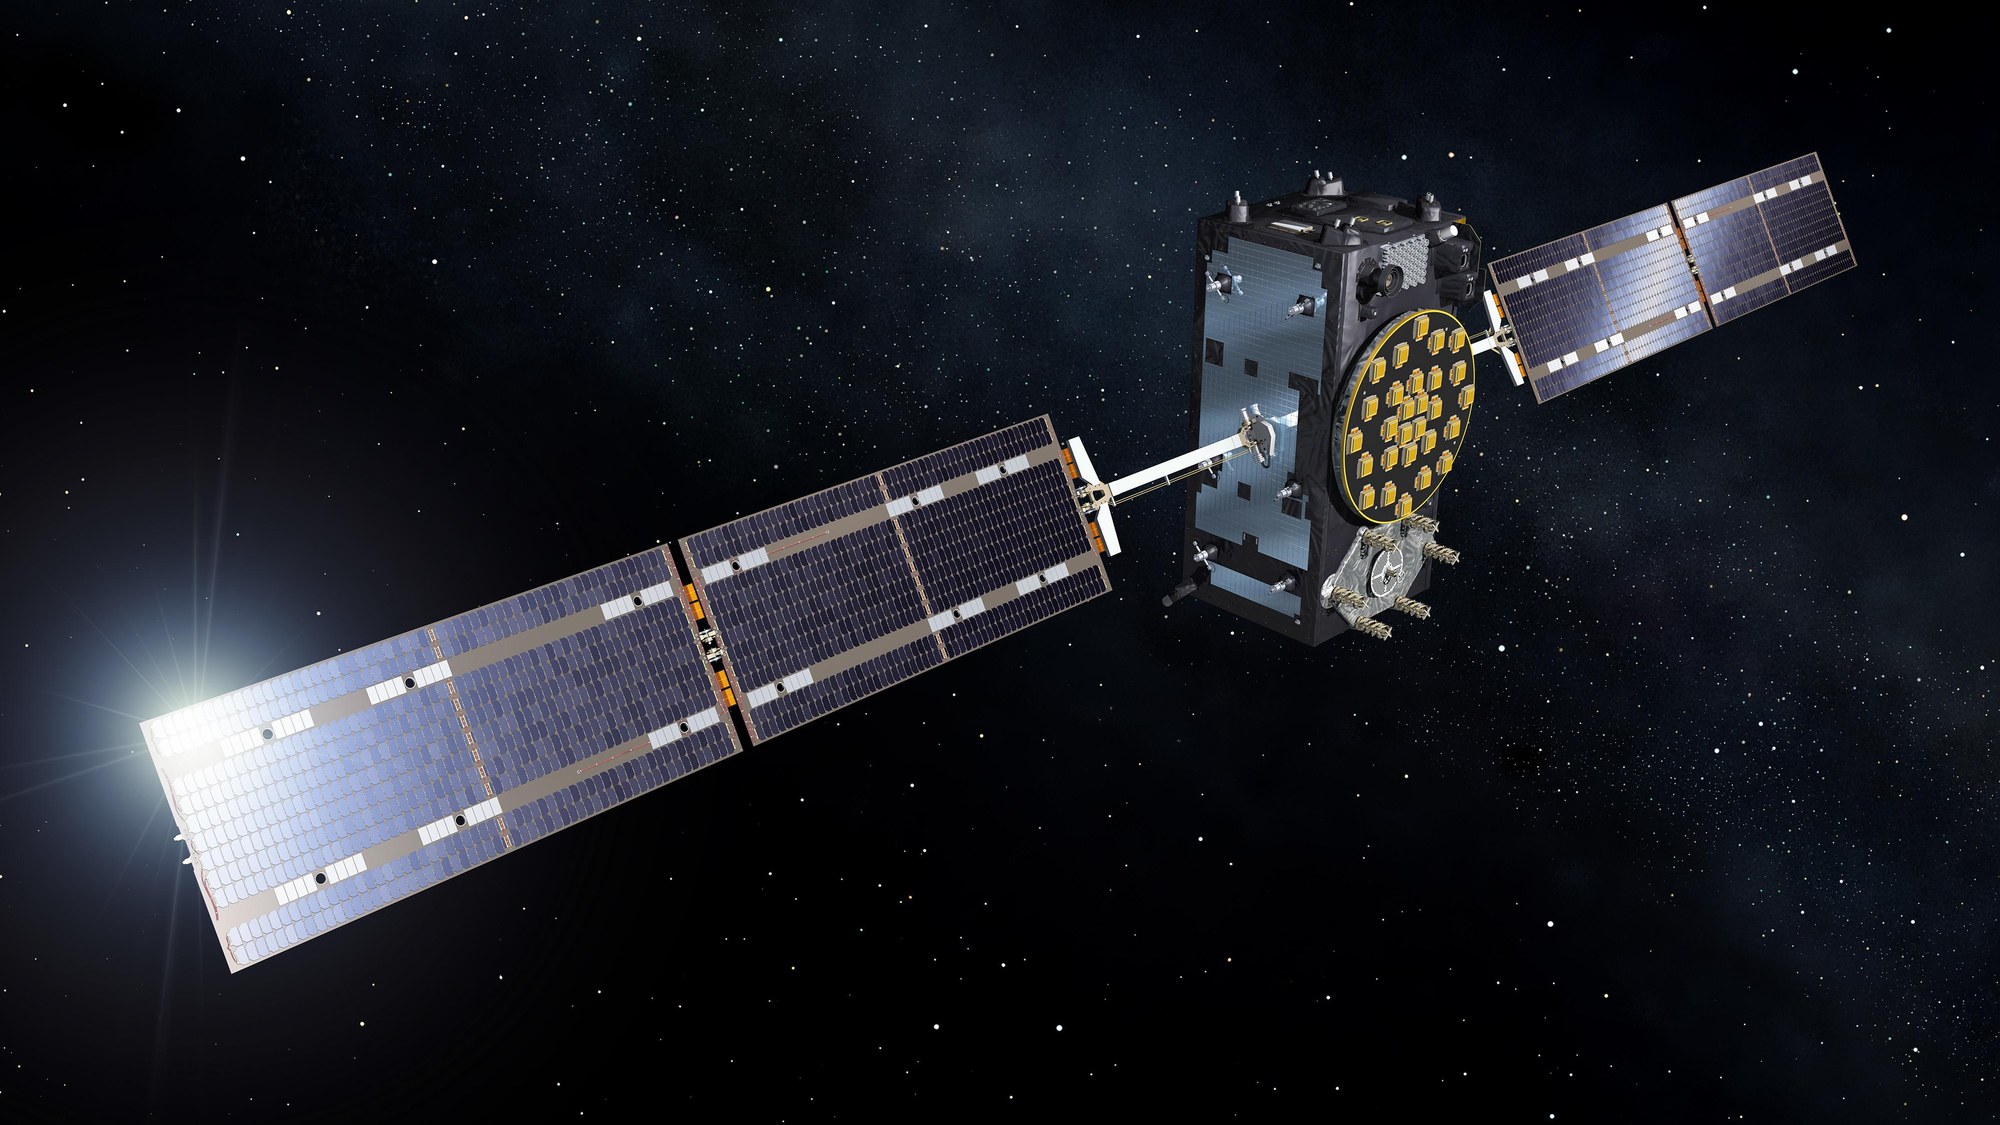 The European satellite navigation system Galileo